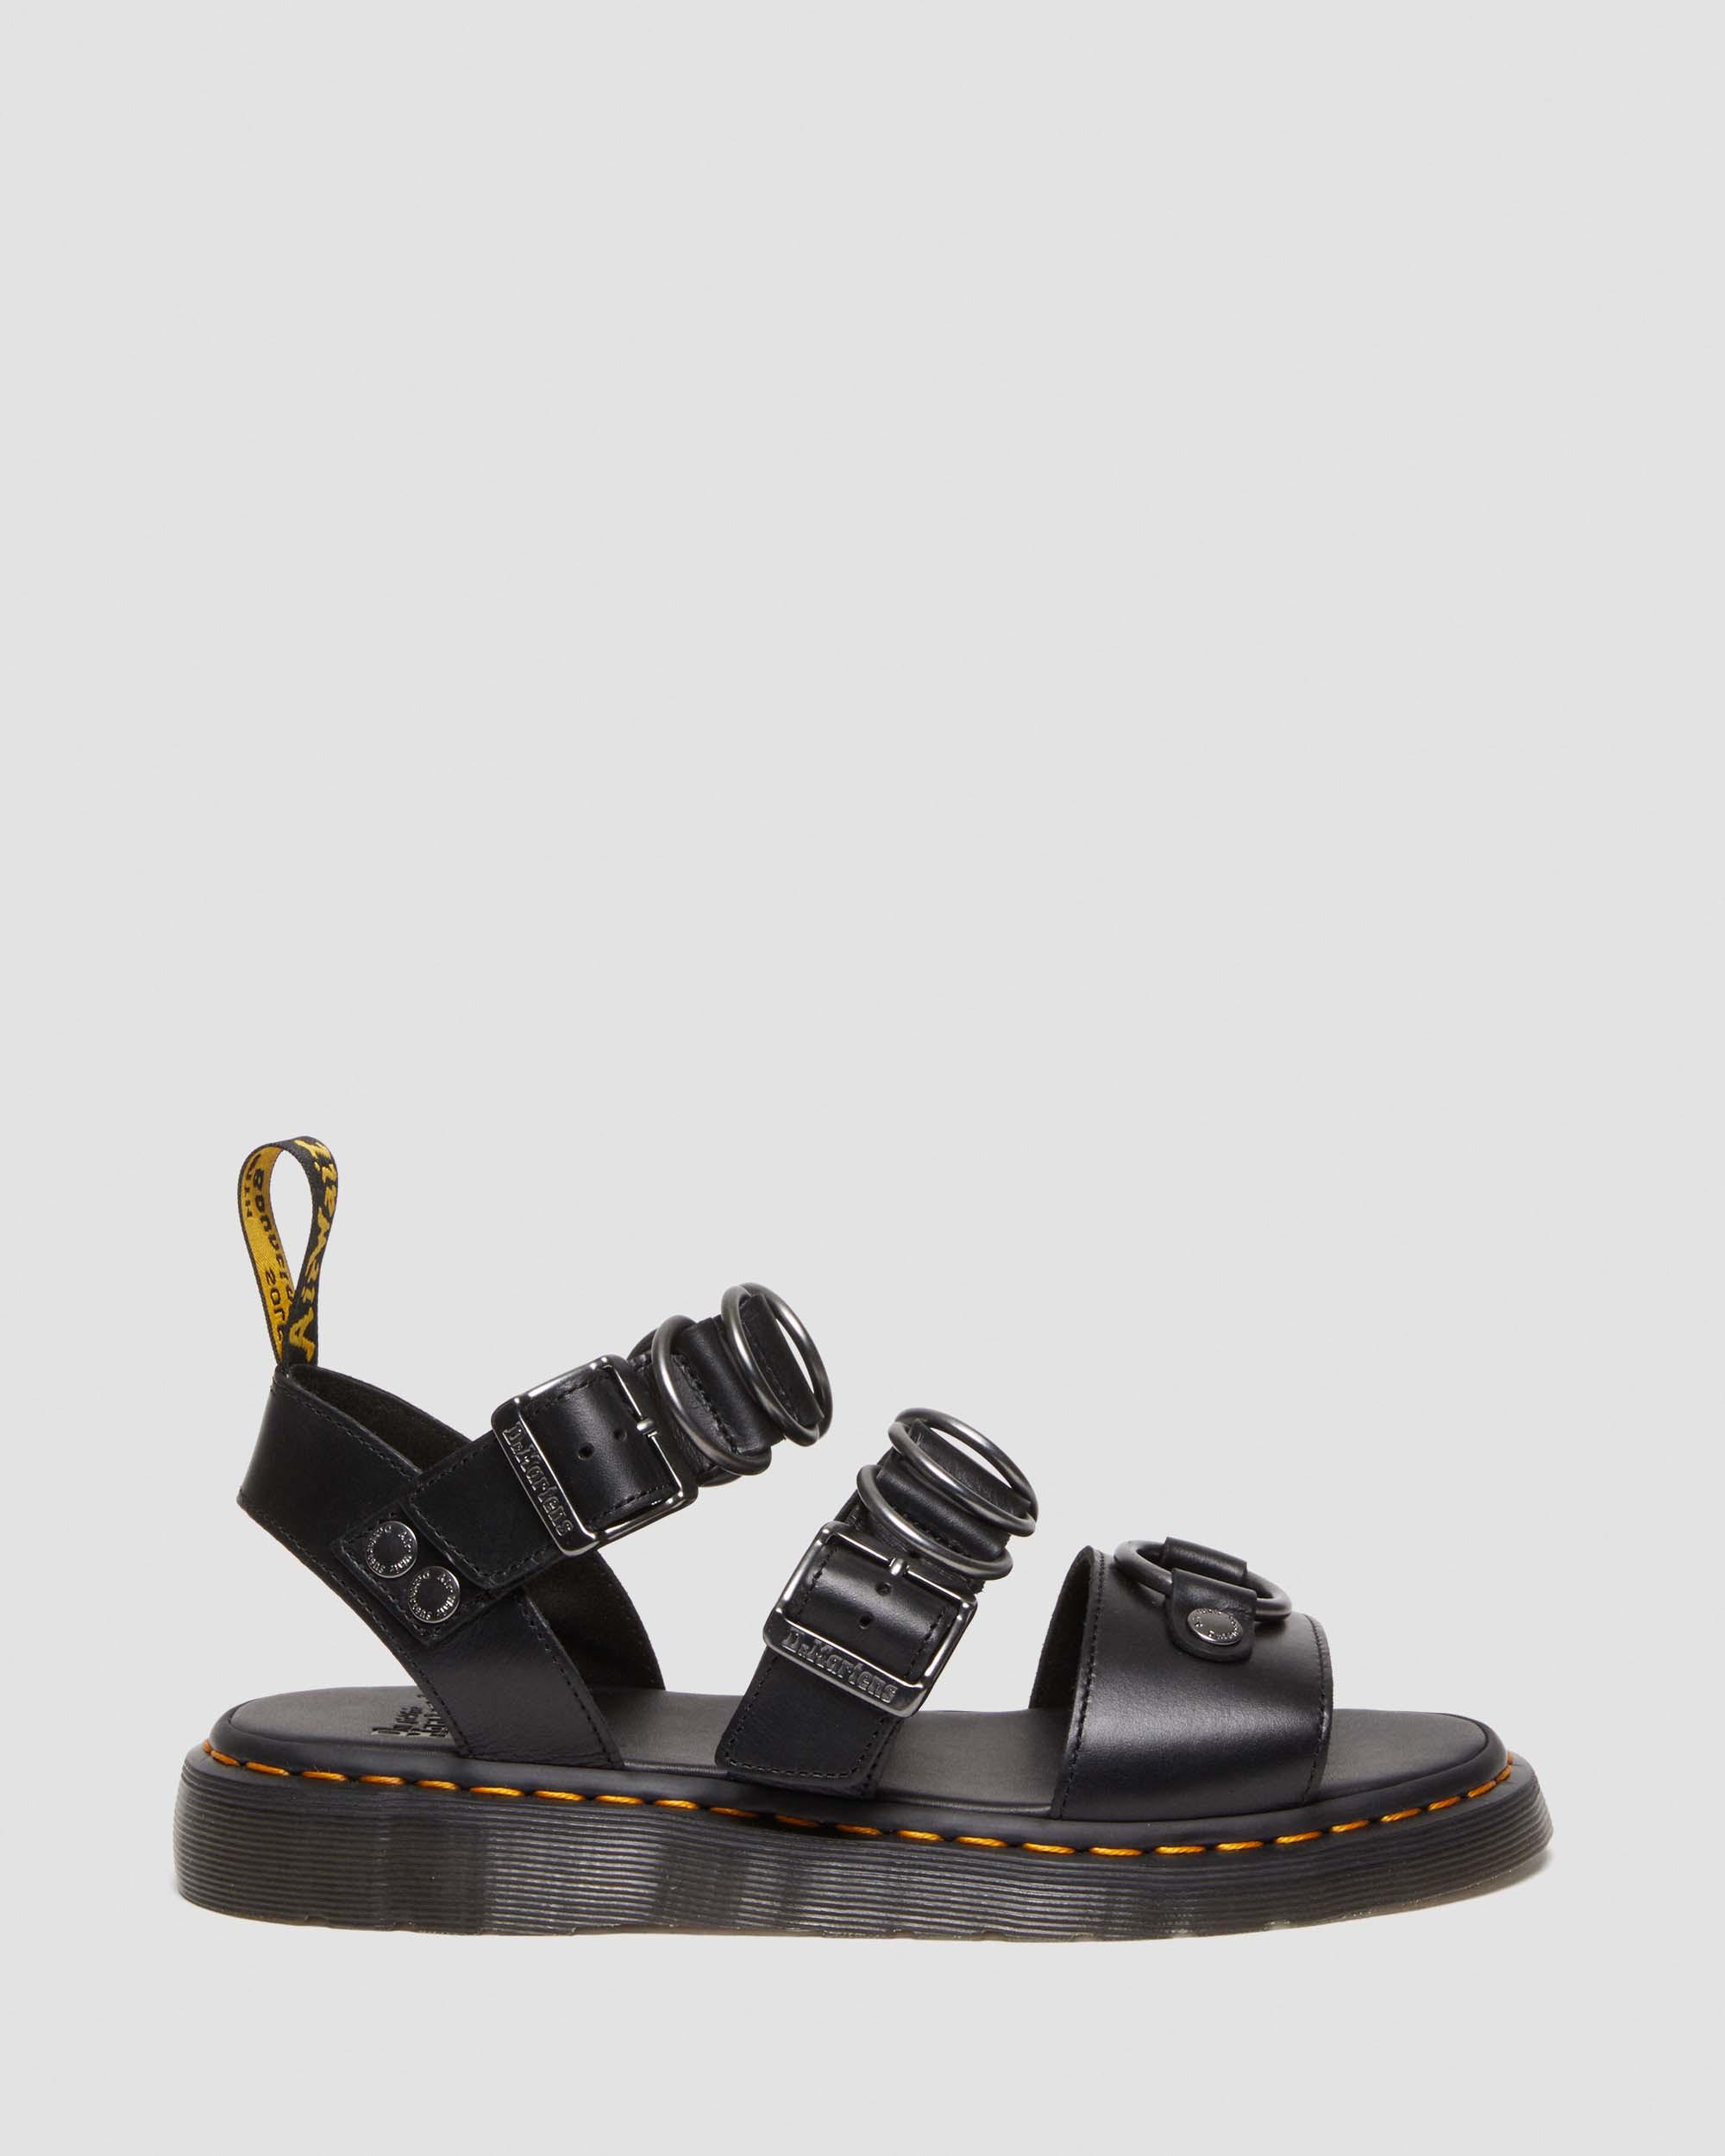 Gryphon Alternative Brando Leather Strap Sandals in Black | Dr. Martens